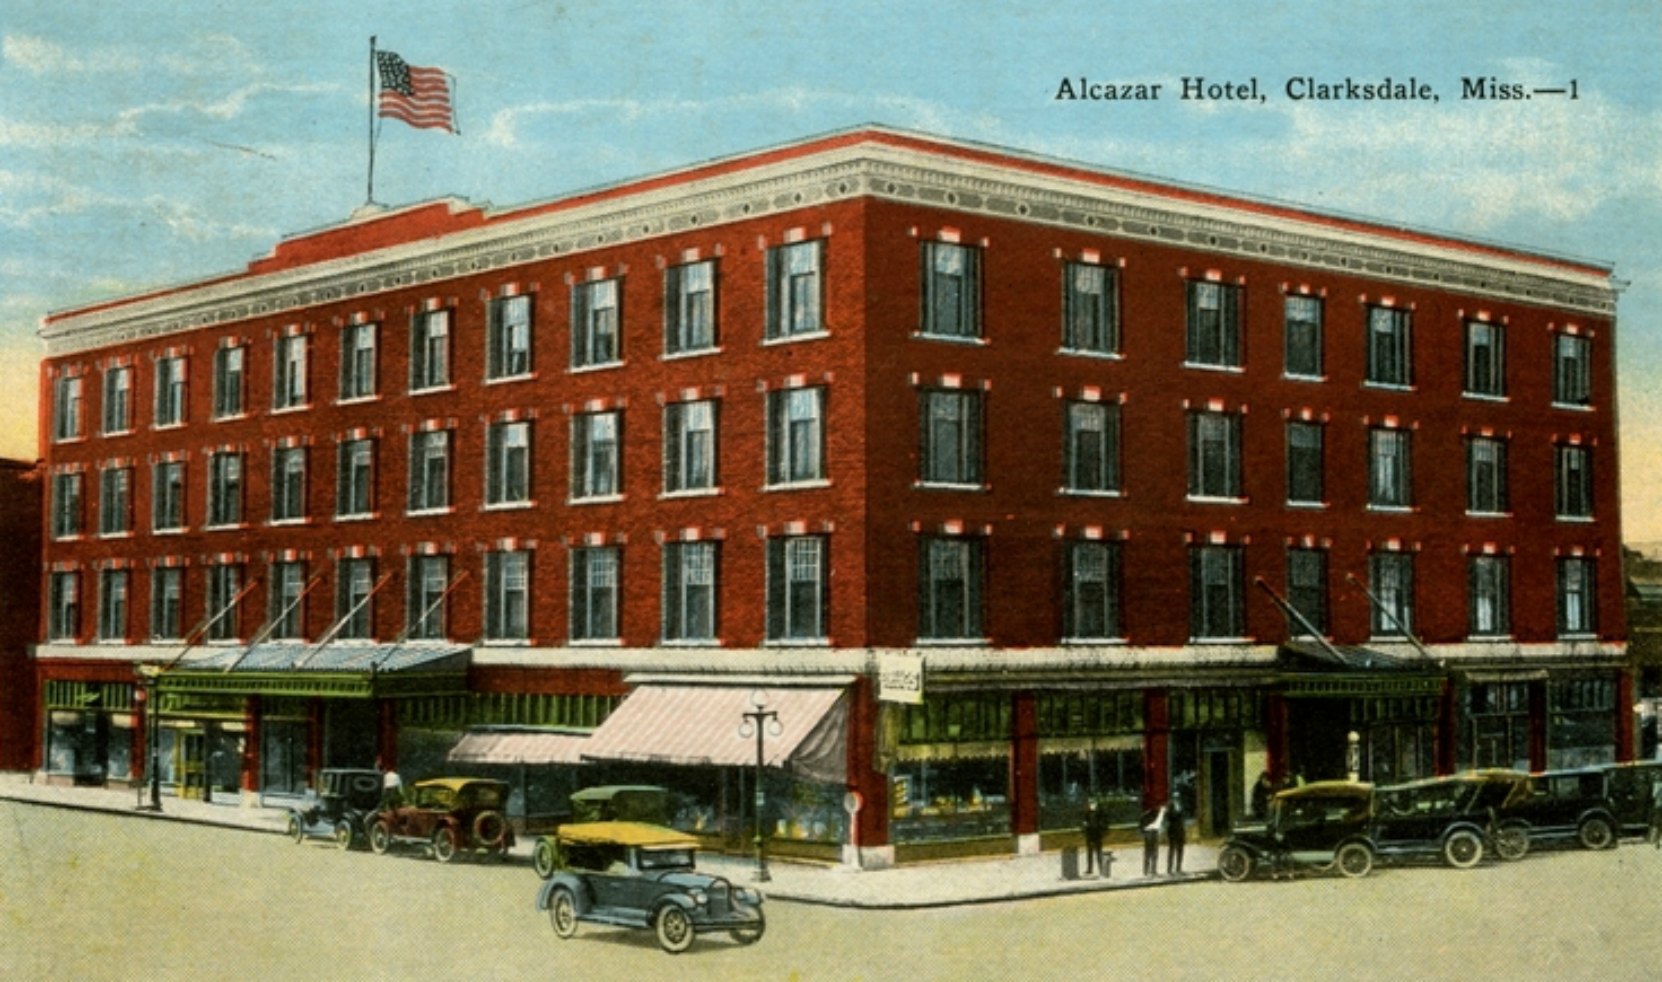 Alcazar Hotel, Clarksdale, Mississippi, circa 1920